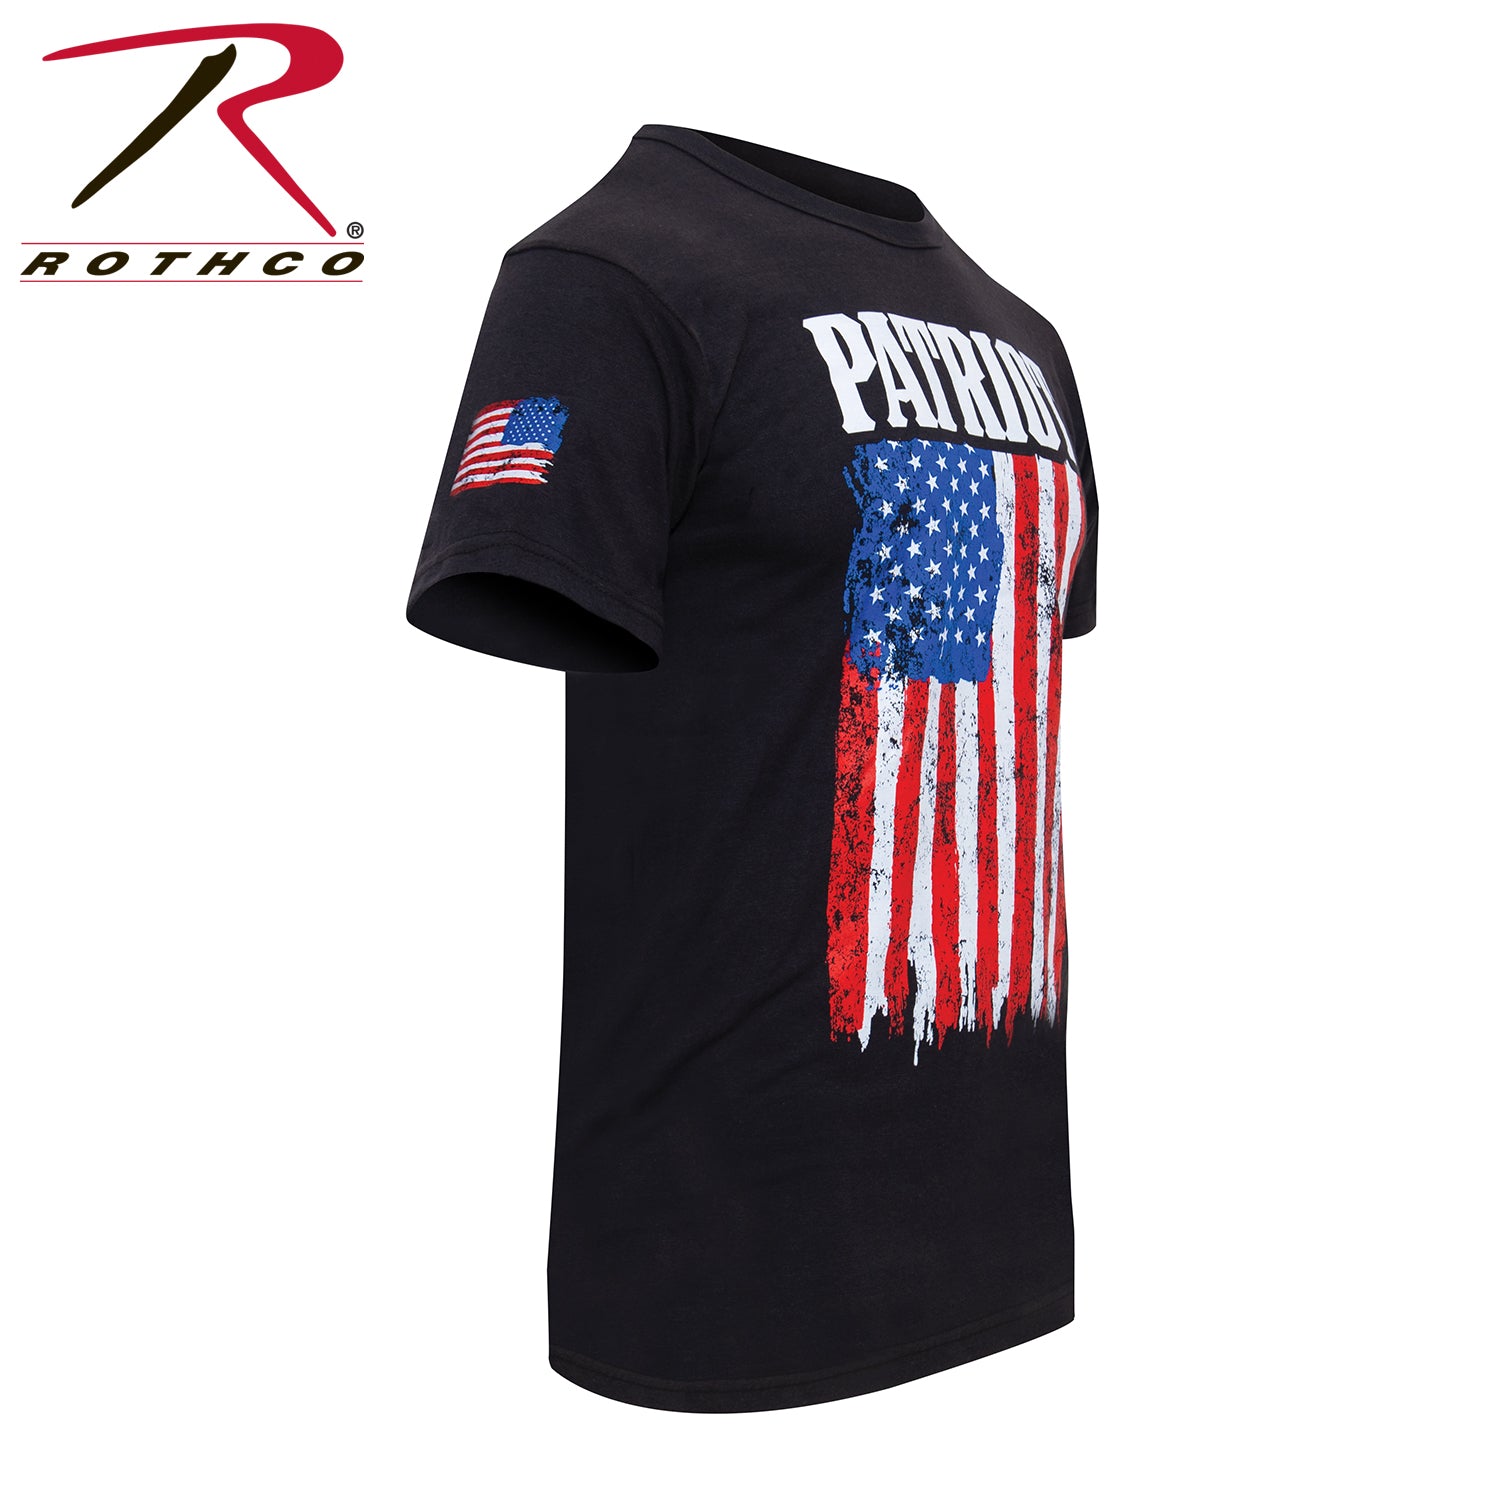 Rothco Patriot US Flag T-Shirt - Black - Tactical Choice Plus